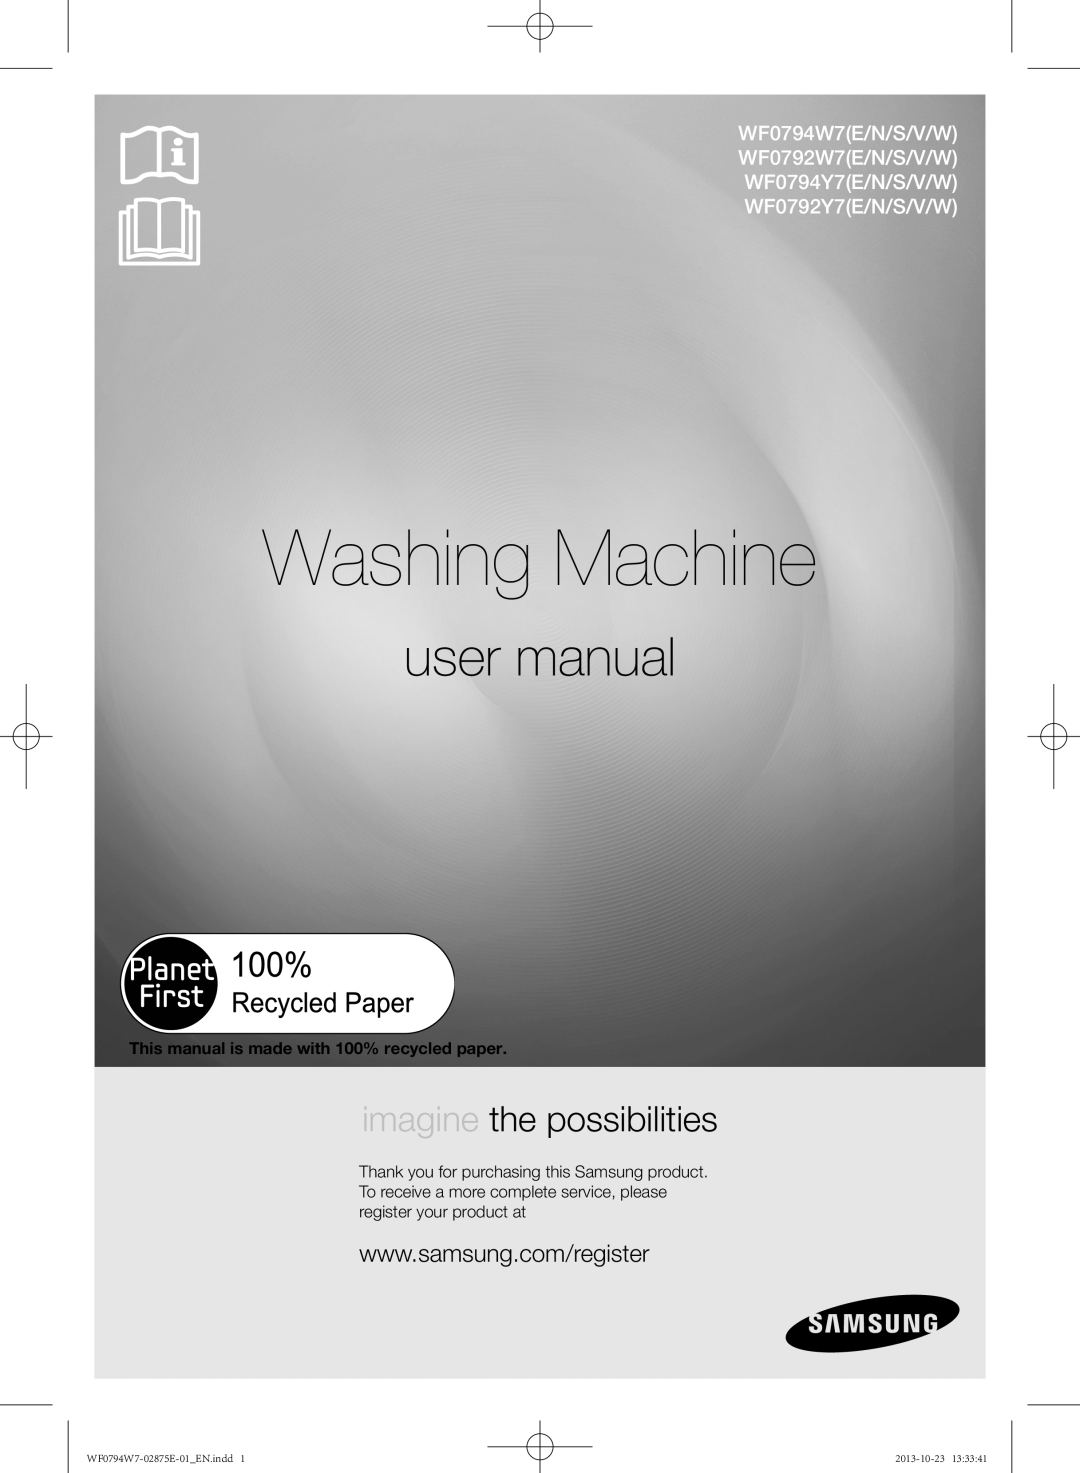 Samsung WF0794W7E9/XSV manual user manual, Washing Machine, imagine the possibilities, WF0792Y7E/N/S/V/W 